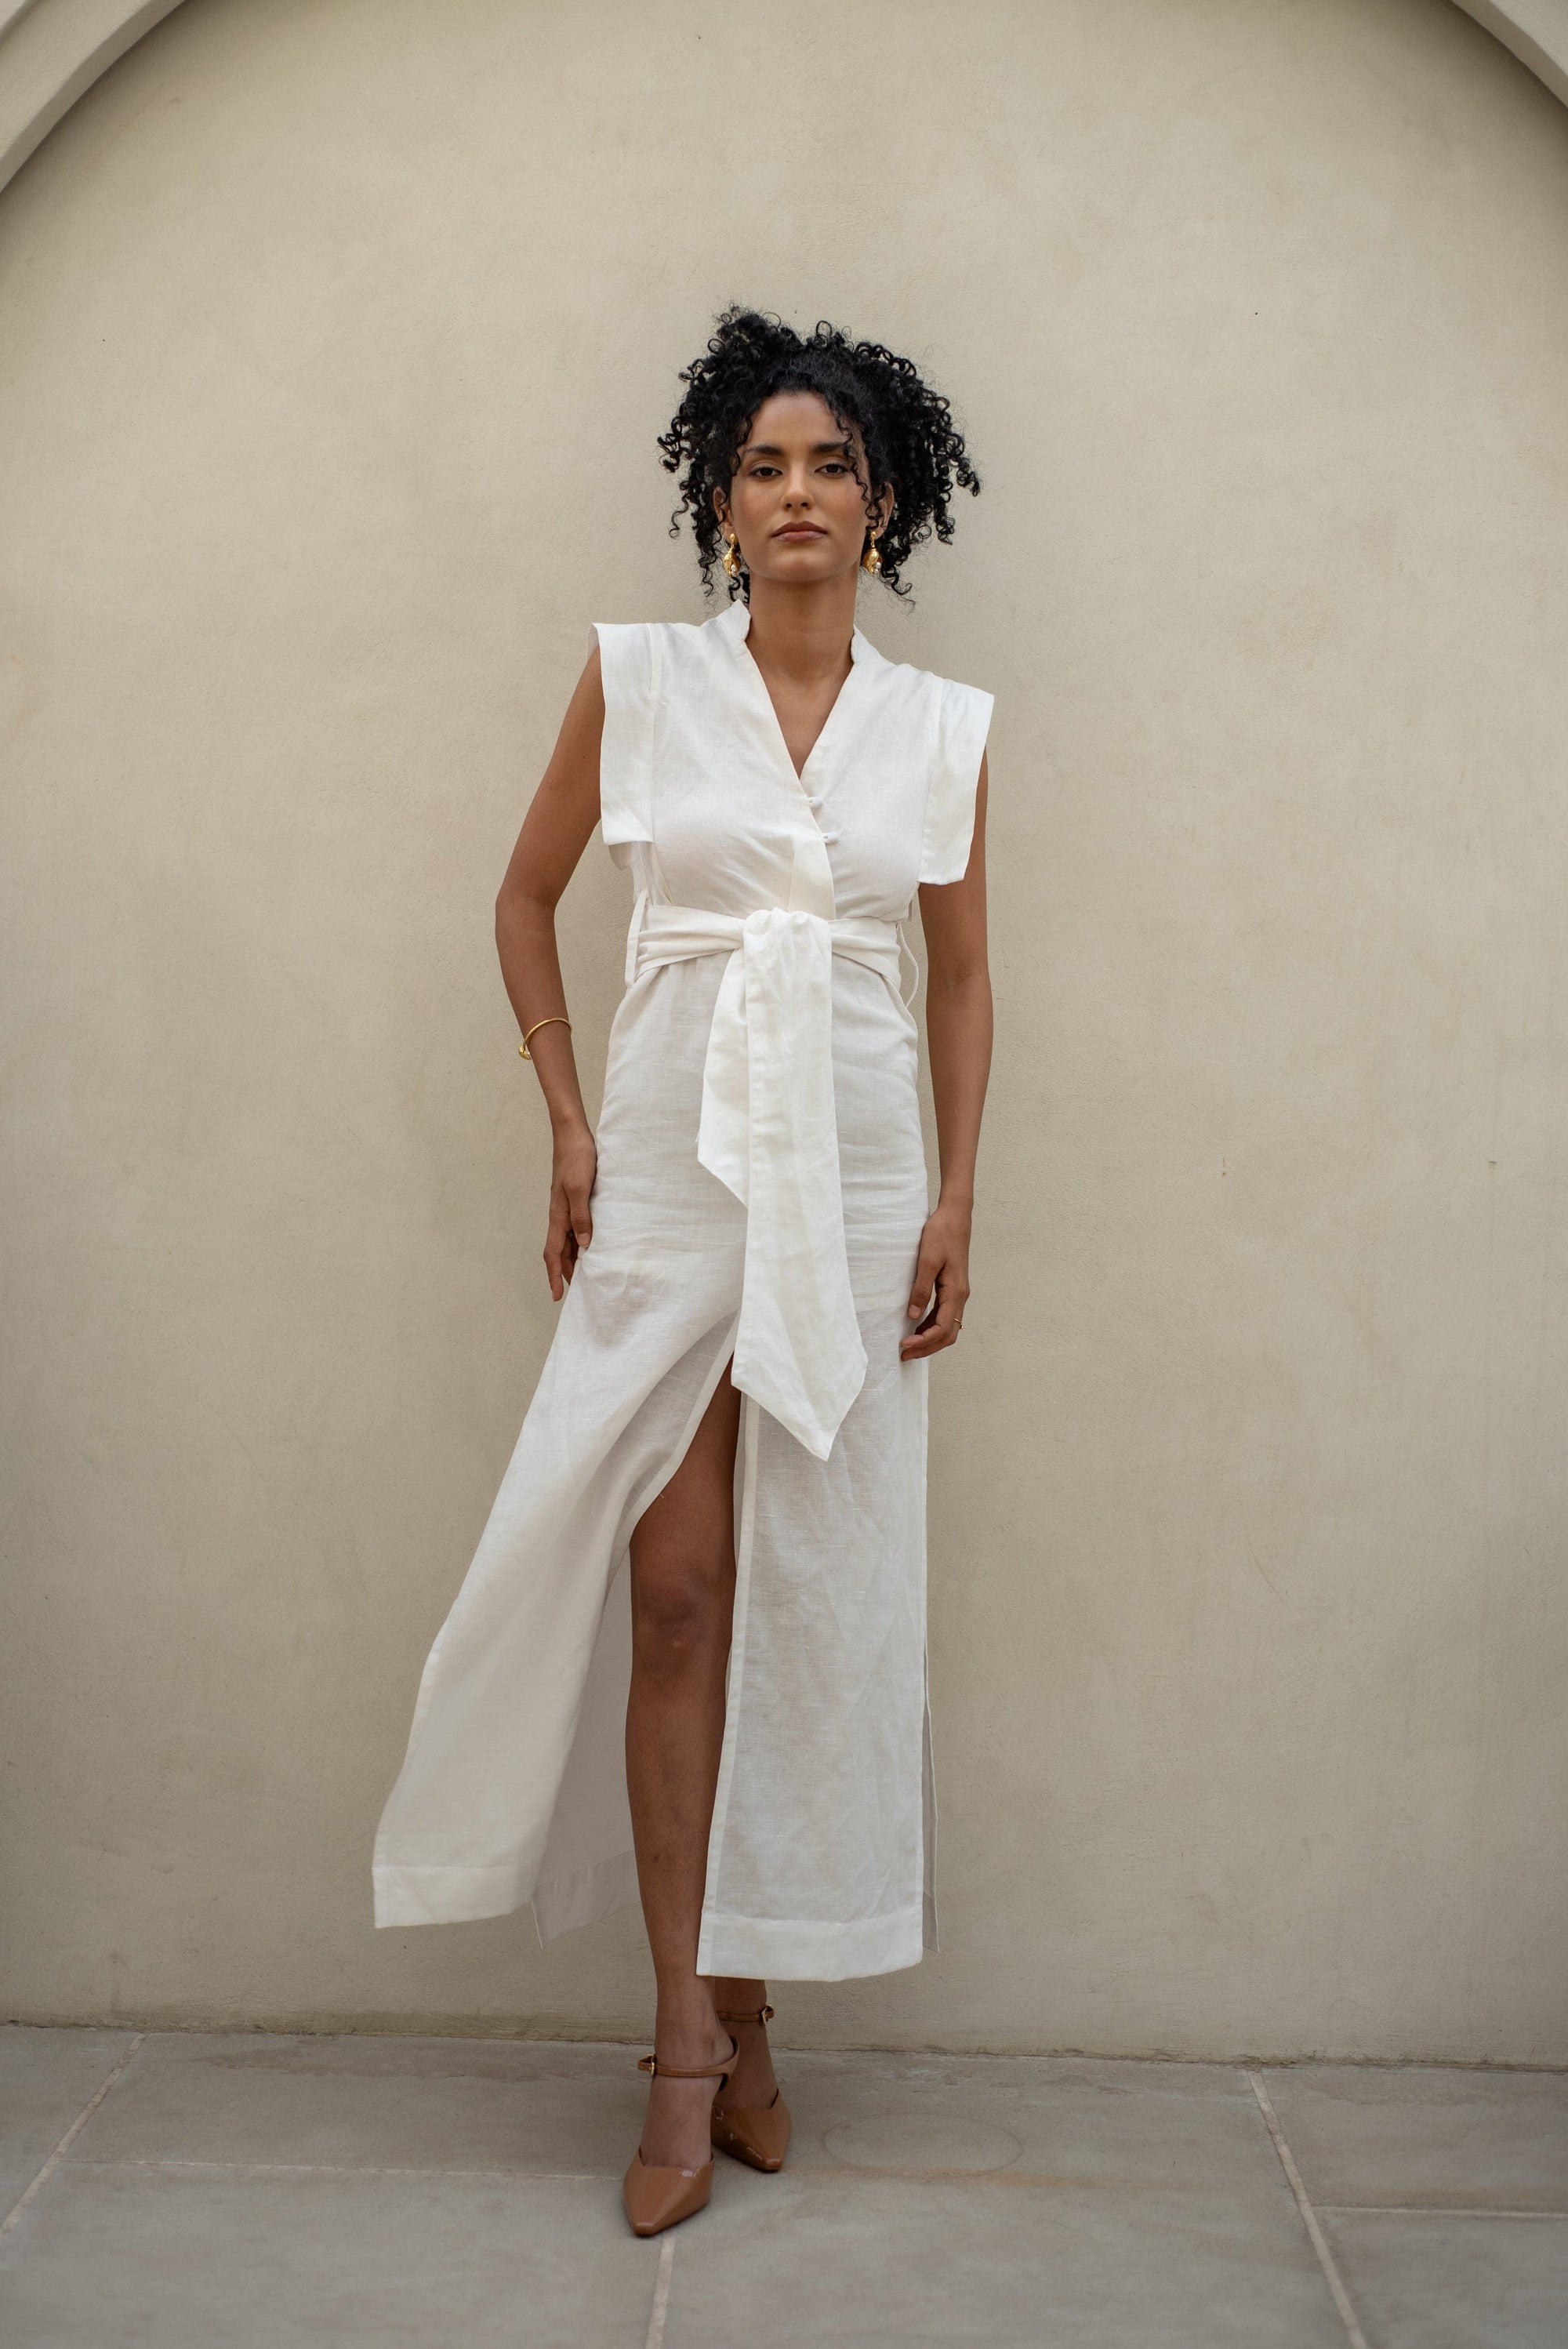 Ivory Linen Dress front shot image with model